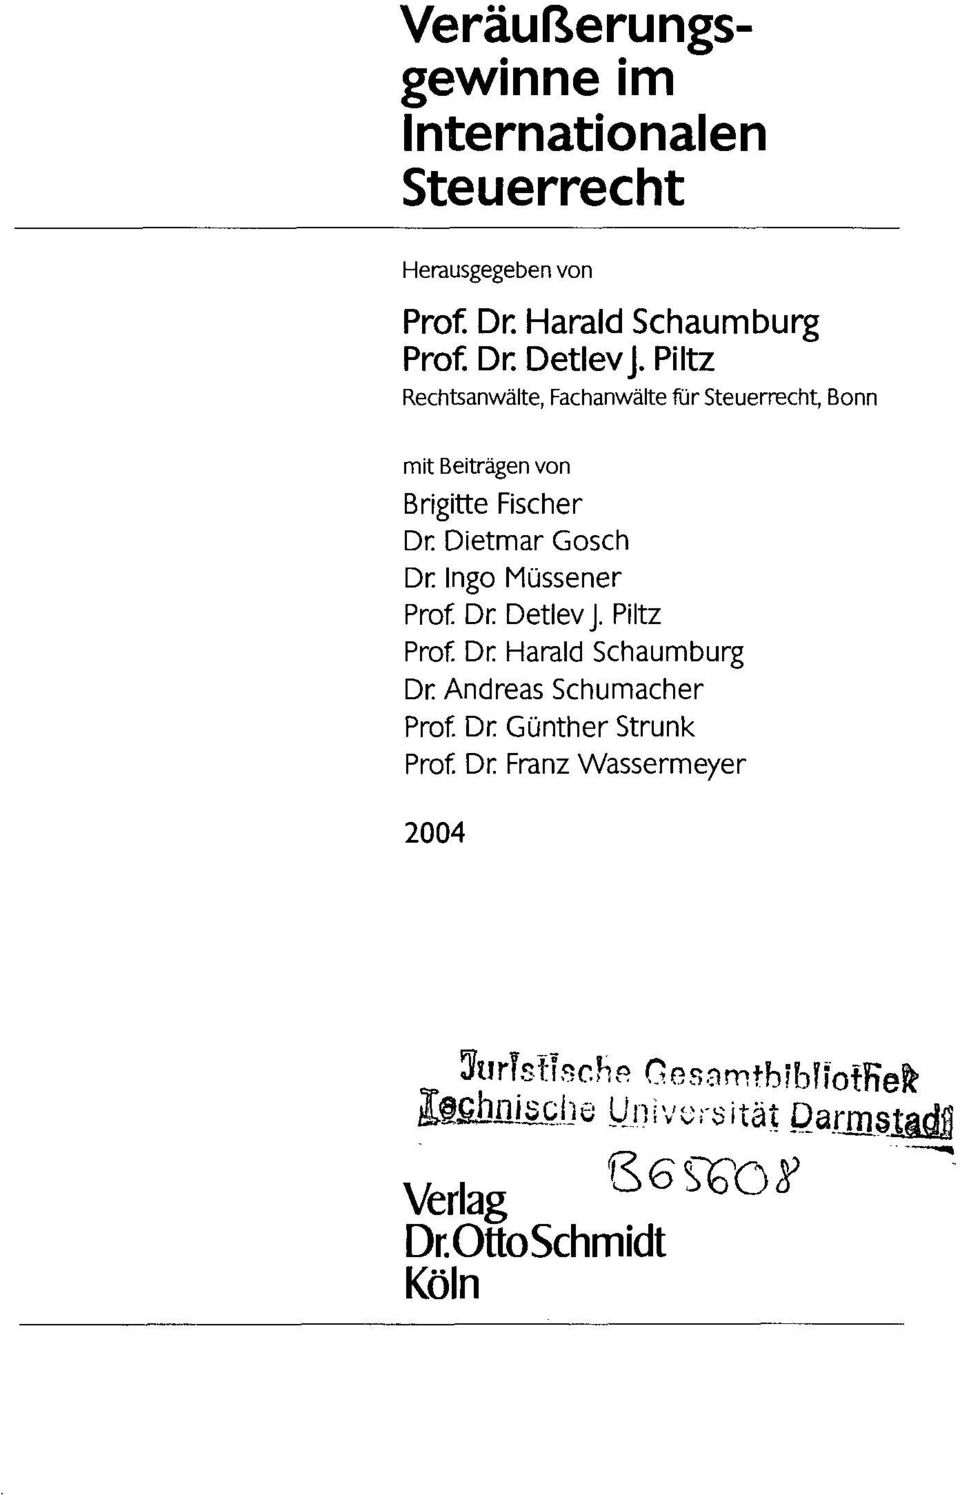 Dietmar Gösch Dr Ingo Müssener Profi Dr Detlev J.